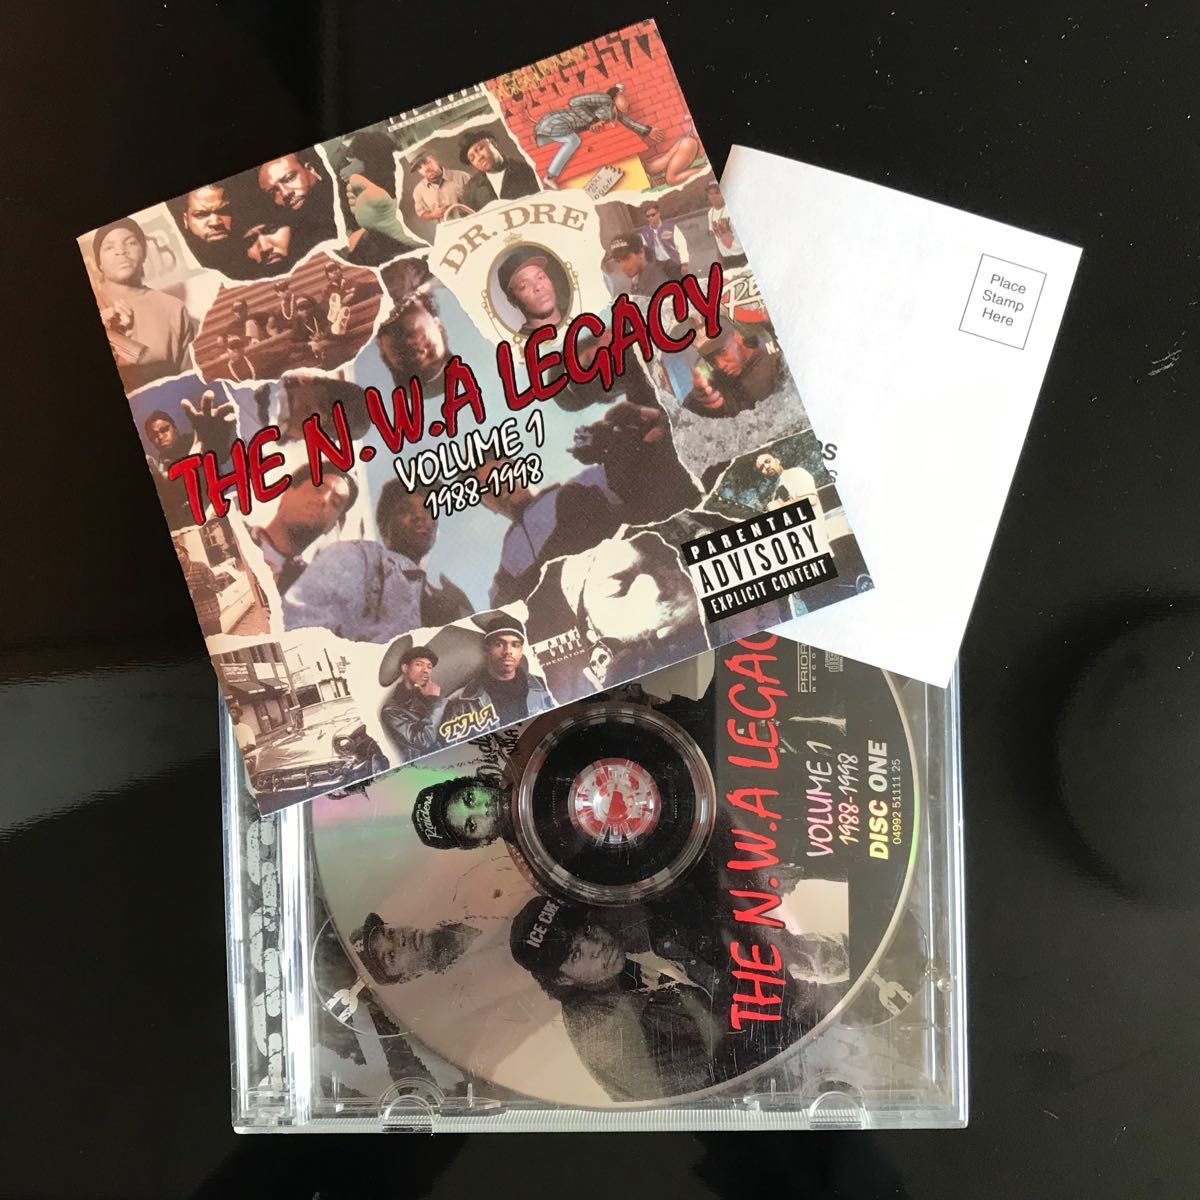 THE N.W.A. LEGACY VOLUME 1 1988-1998 US盤 CD2枚組 G-RAP WESTSIDE